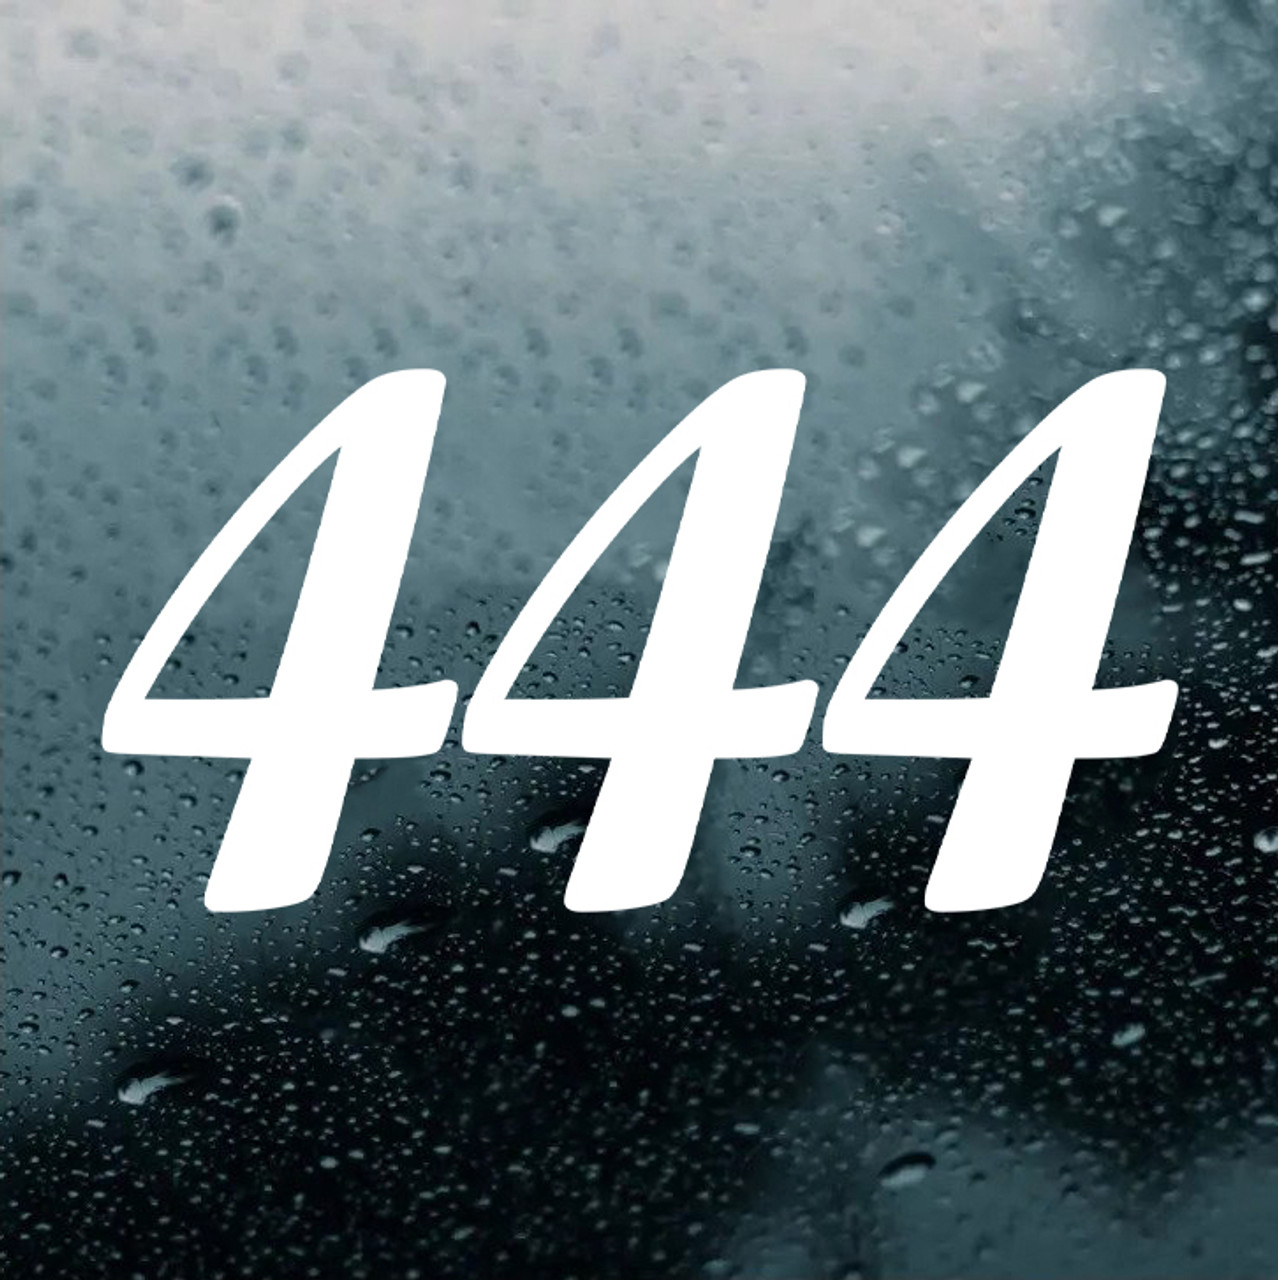 444 Angel Number Vinyl Decal - Protection Discipline Numerology  - Die Cut Sticker